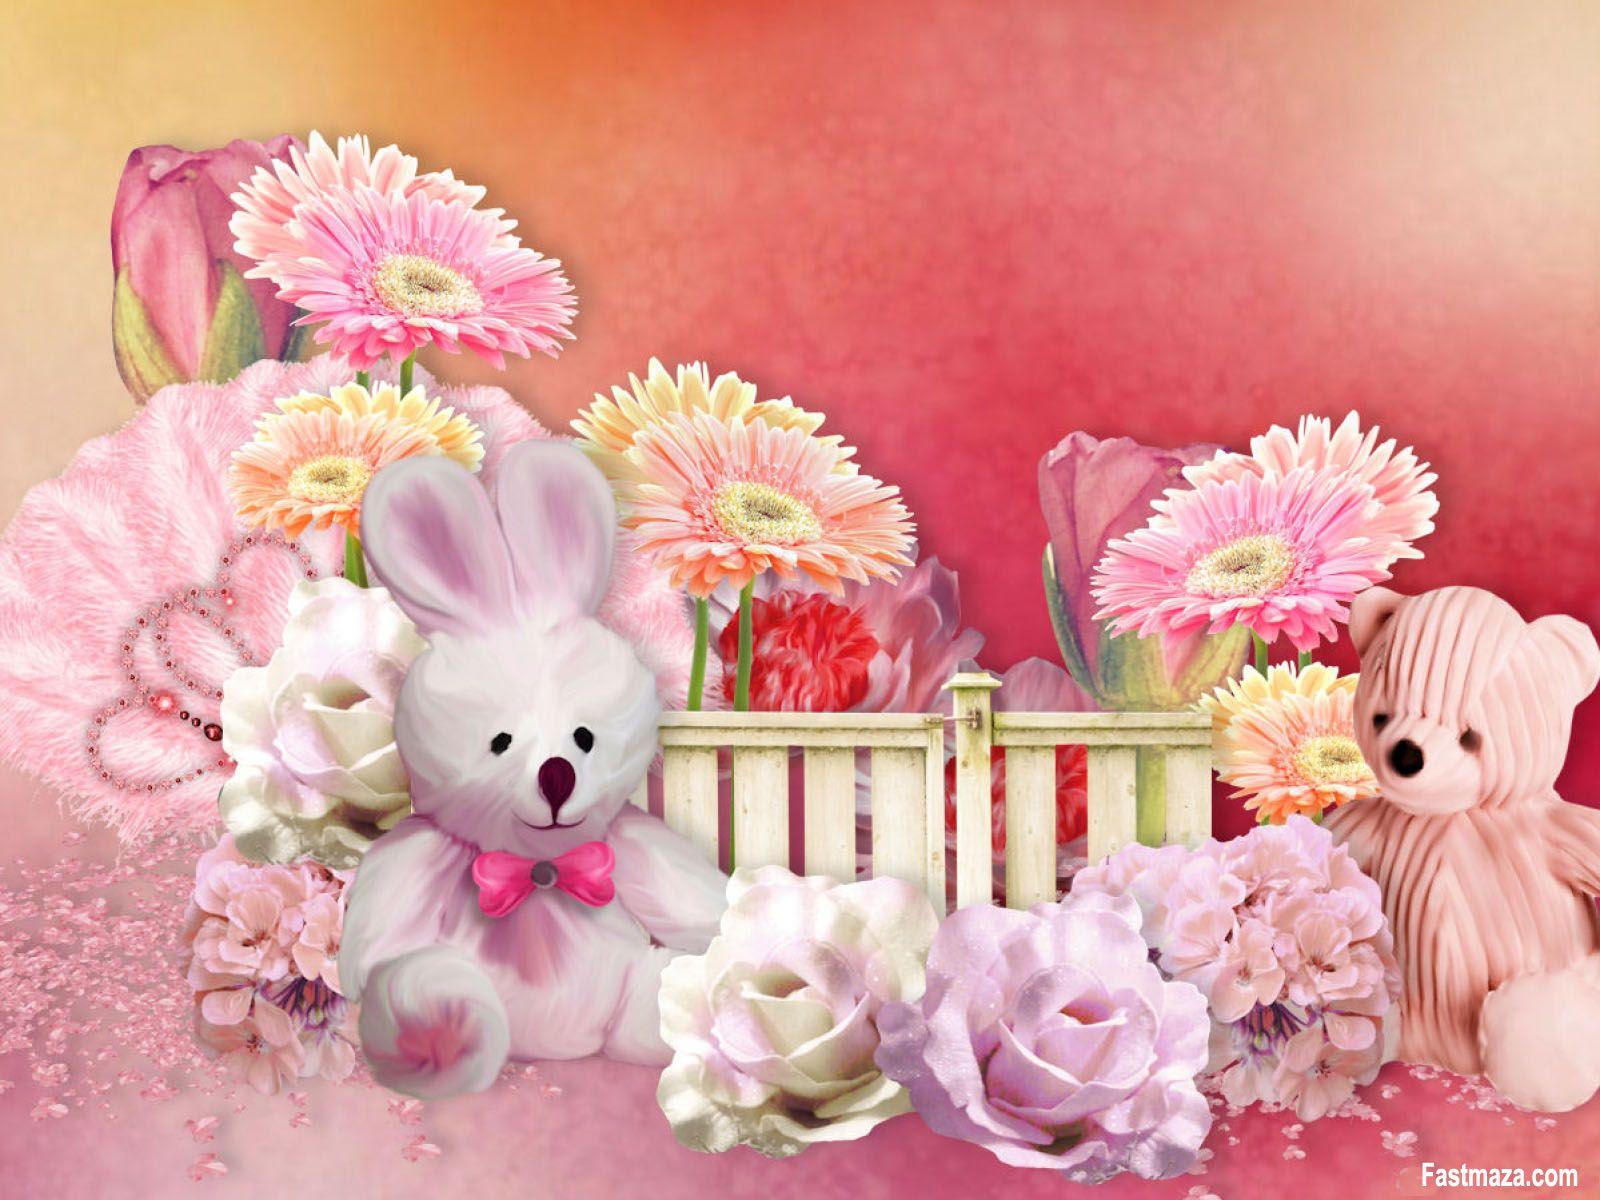  Cute  Pink  Teddy  Bear  Wallpapers  For Desktop Wallpaper  Cave